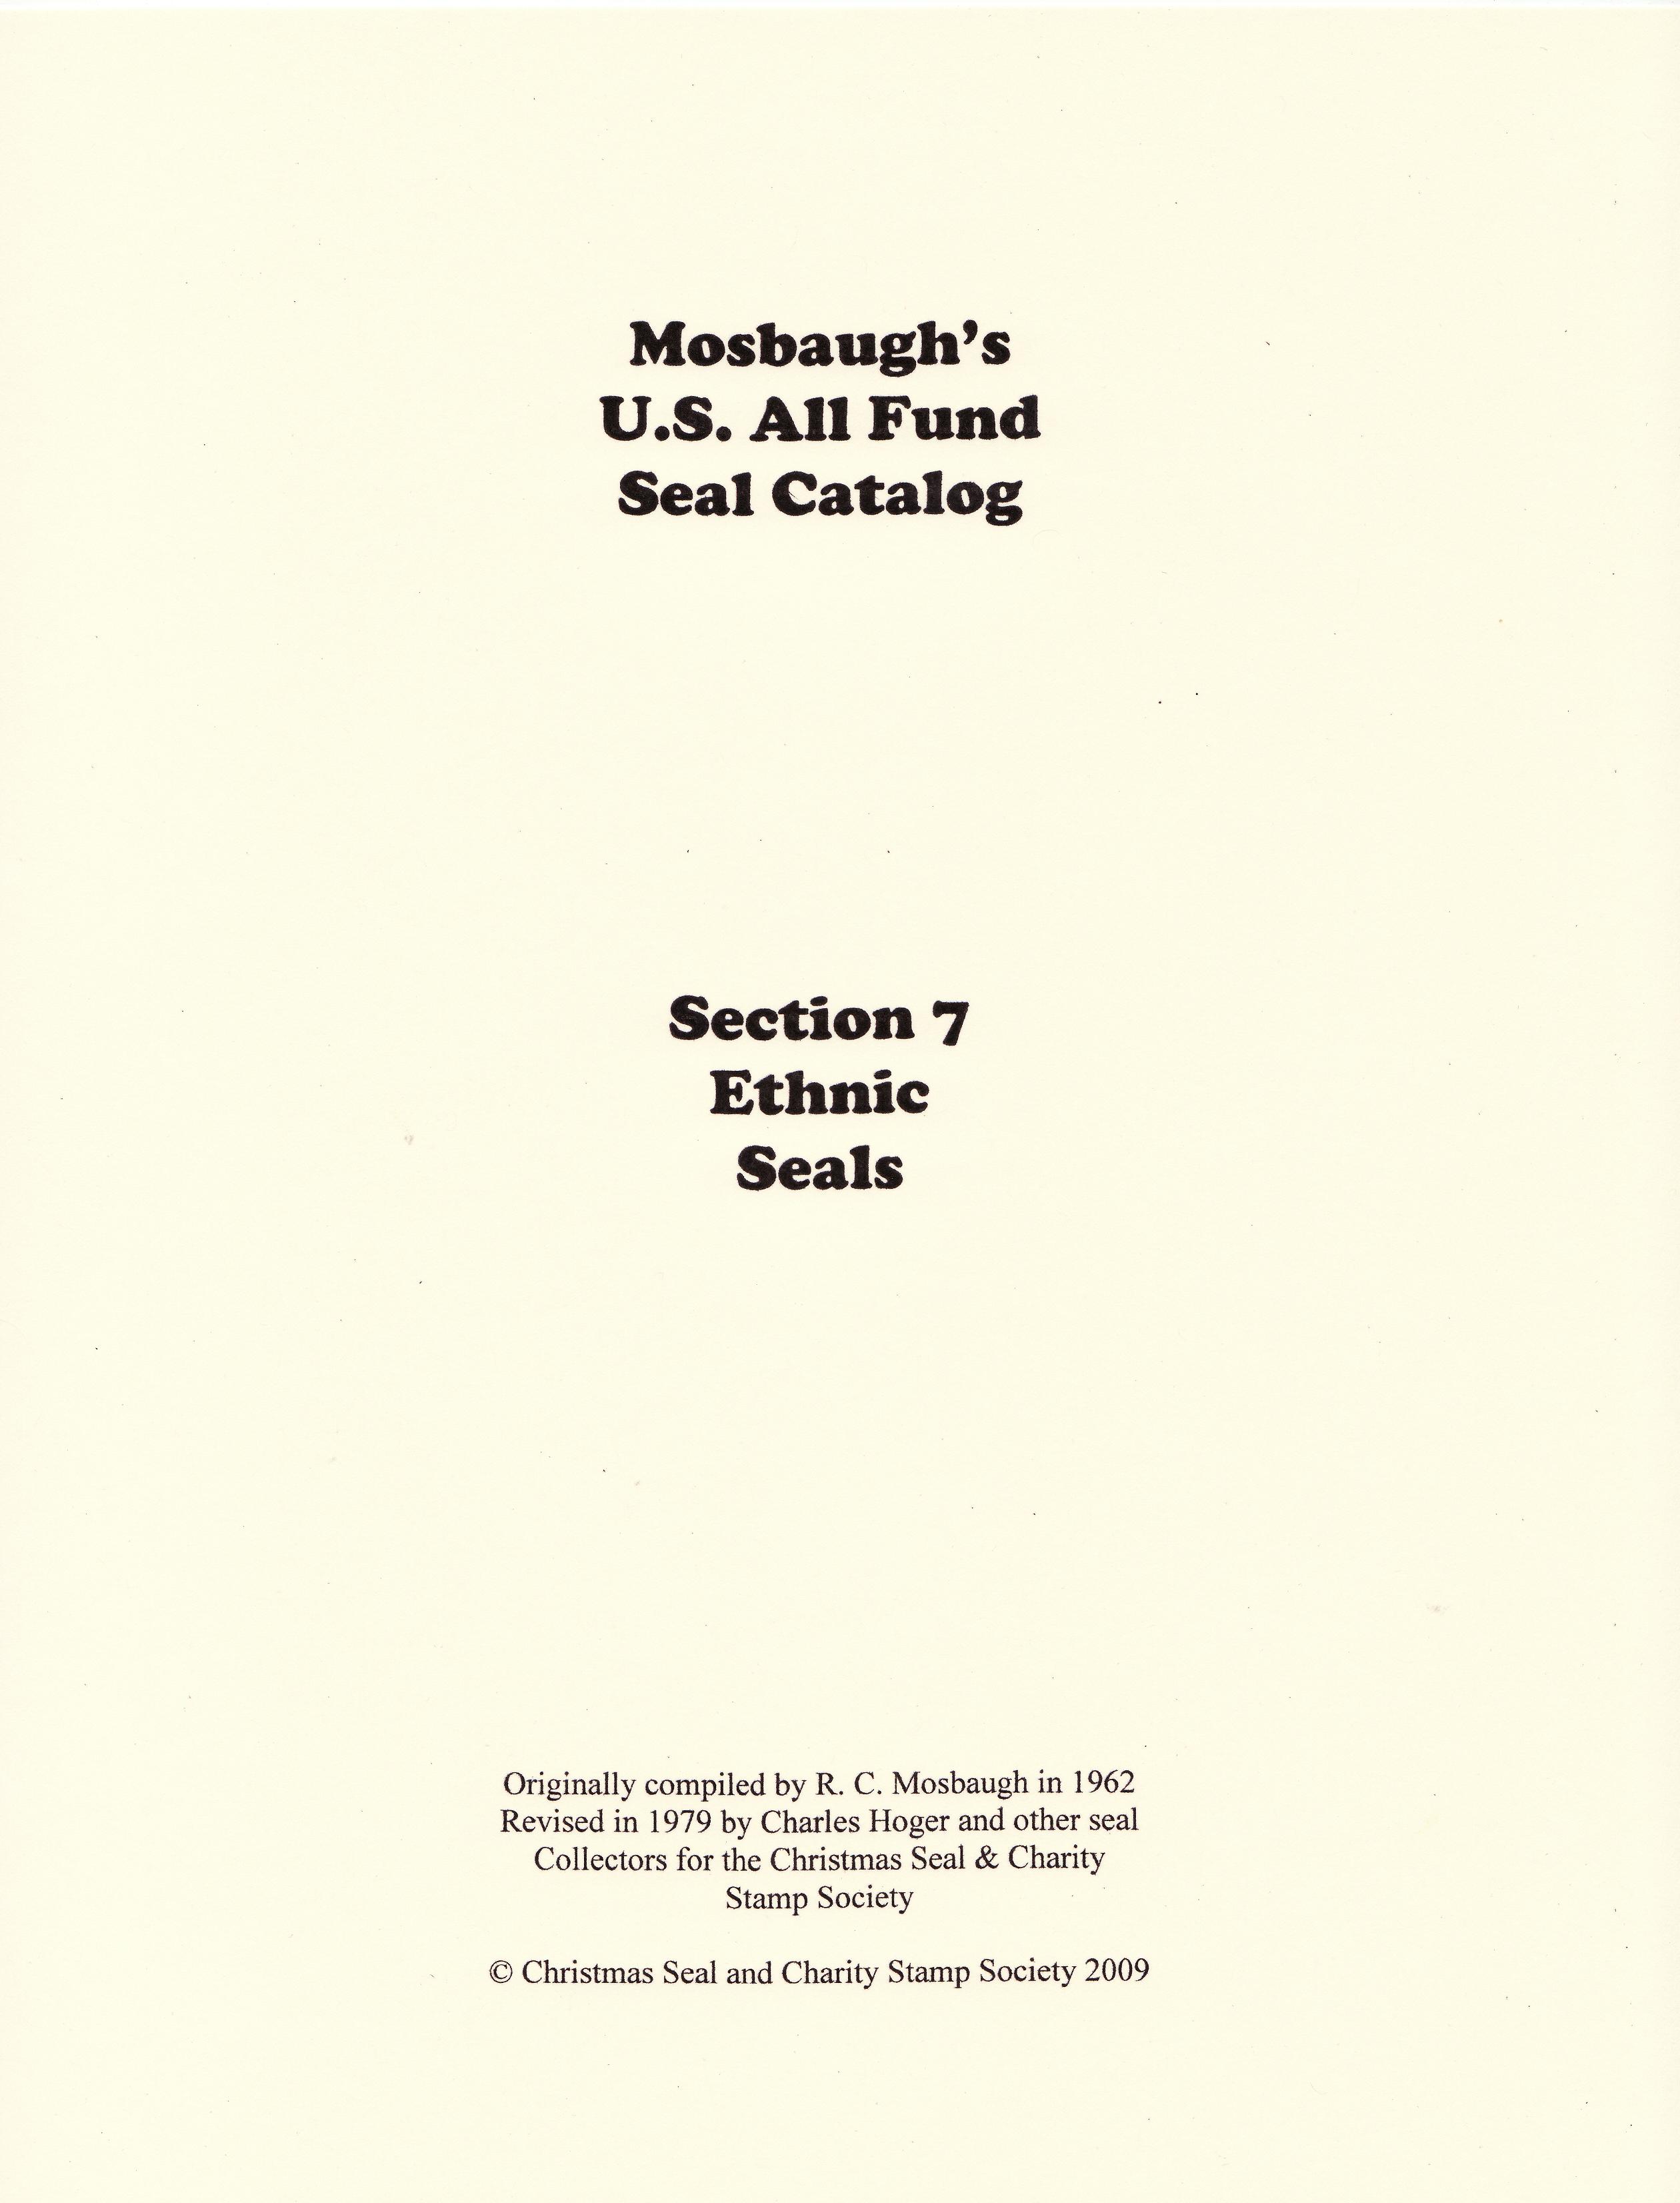 Mosbaugh's Catalog, Sec. 7, Ethnic Charity Seals, 1962 ed., Rev. 1979